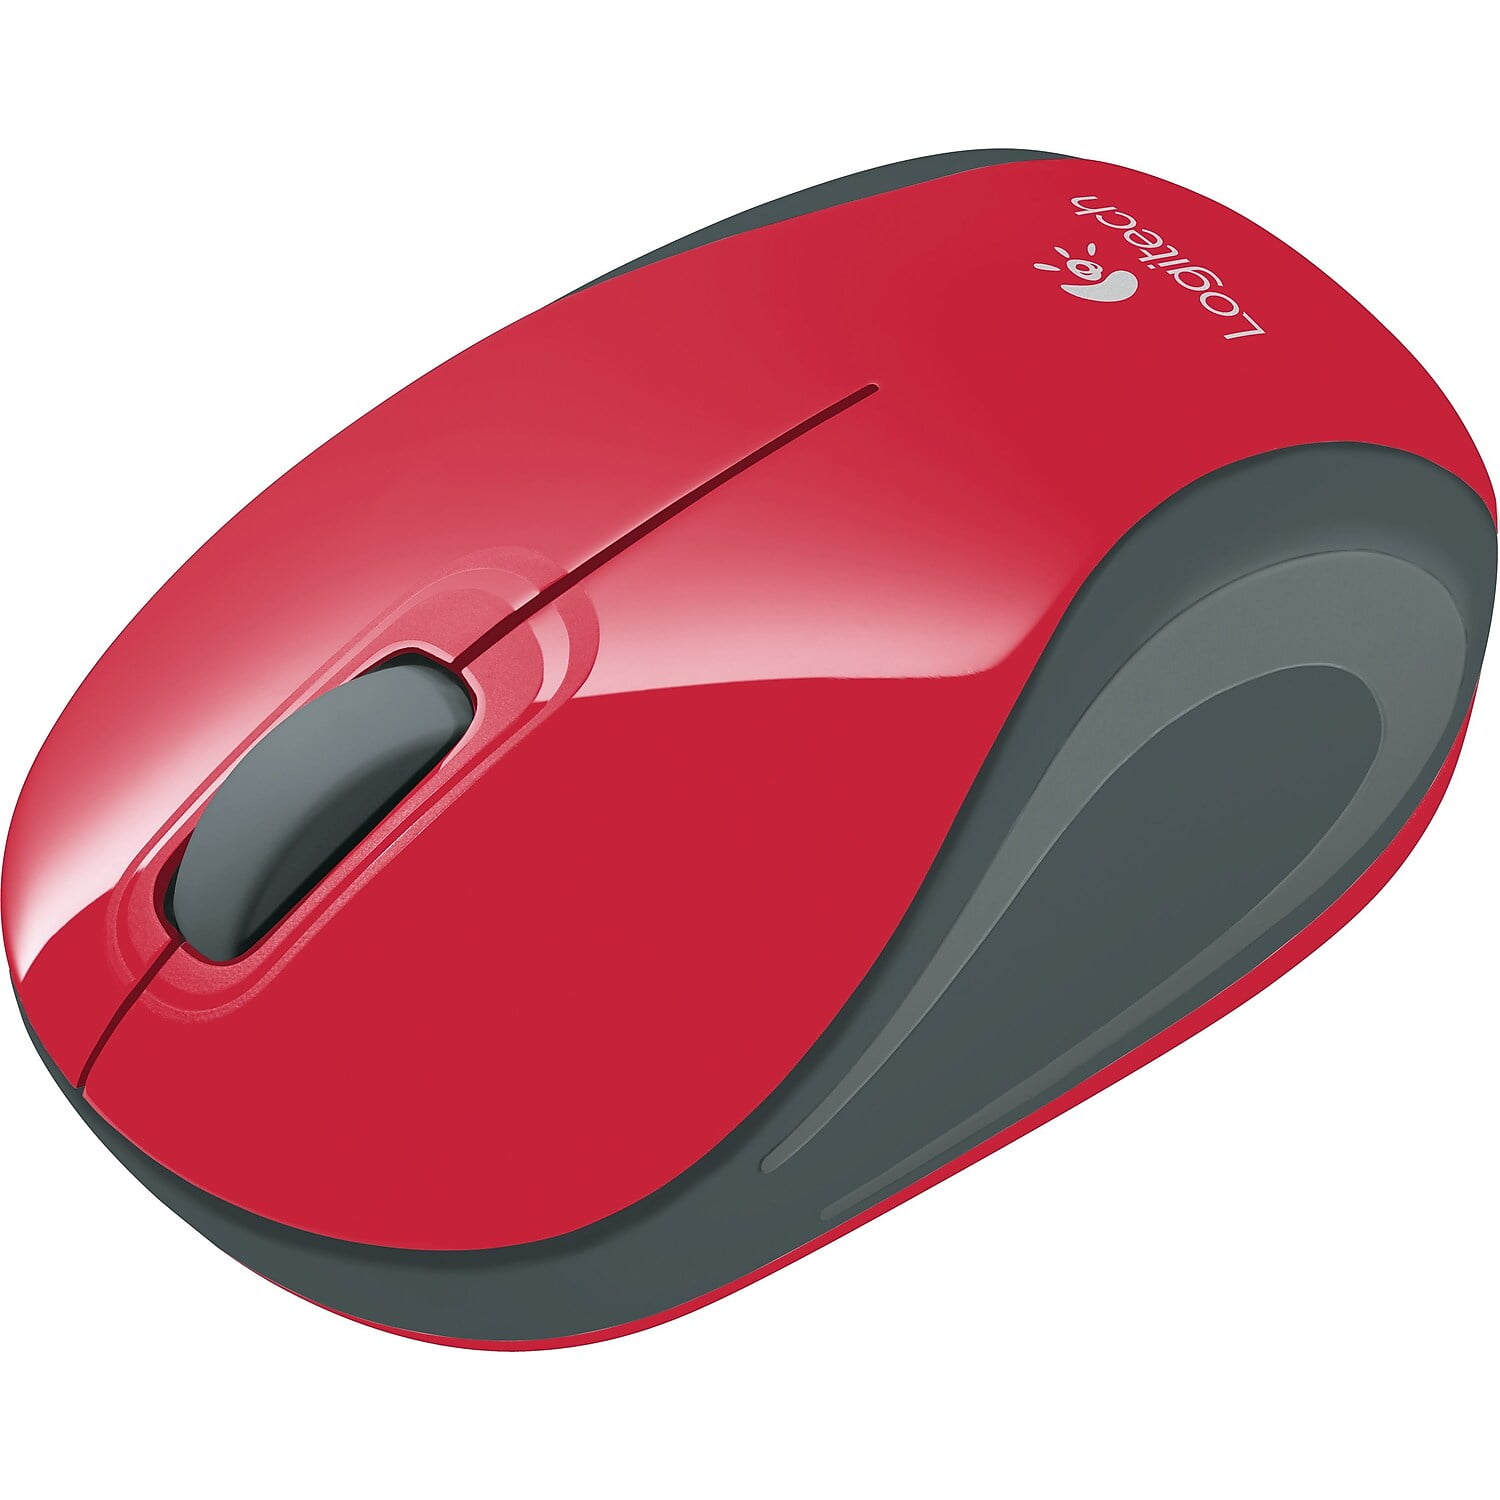 Mini Wireless M187 Logitech Red Mouse,